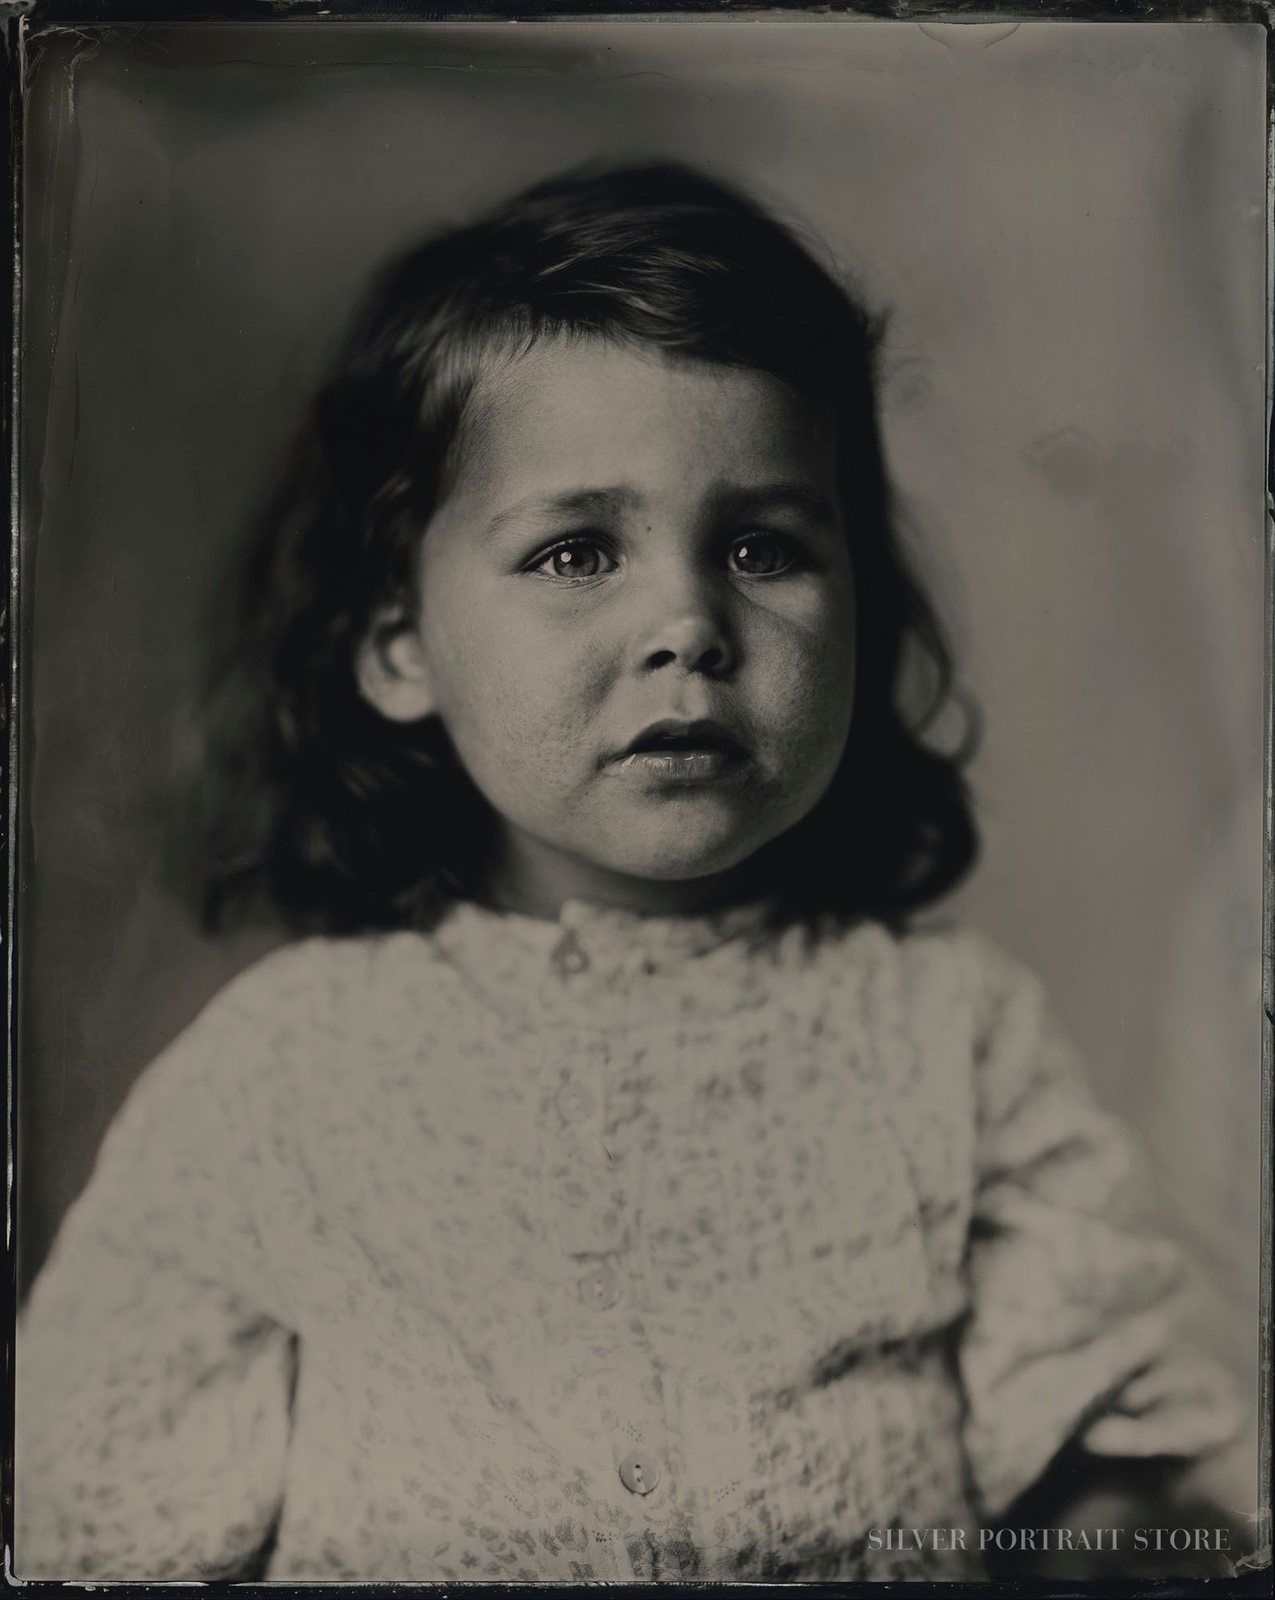 Julie-Silver Portrait Store-Wet plate collodion-Tintype 20 x 25 cm.